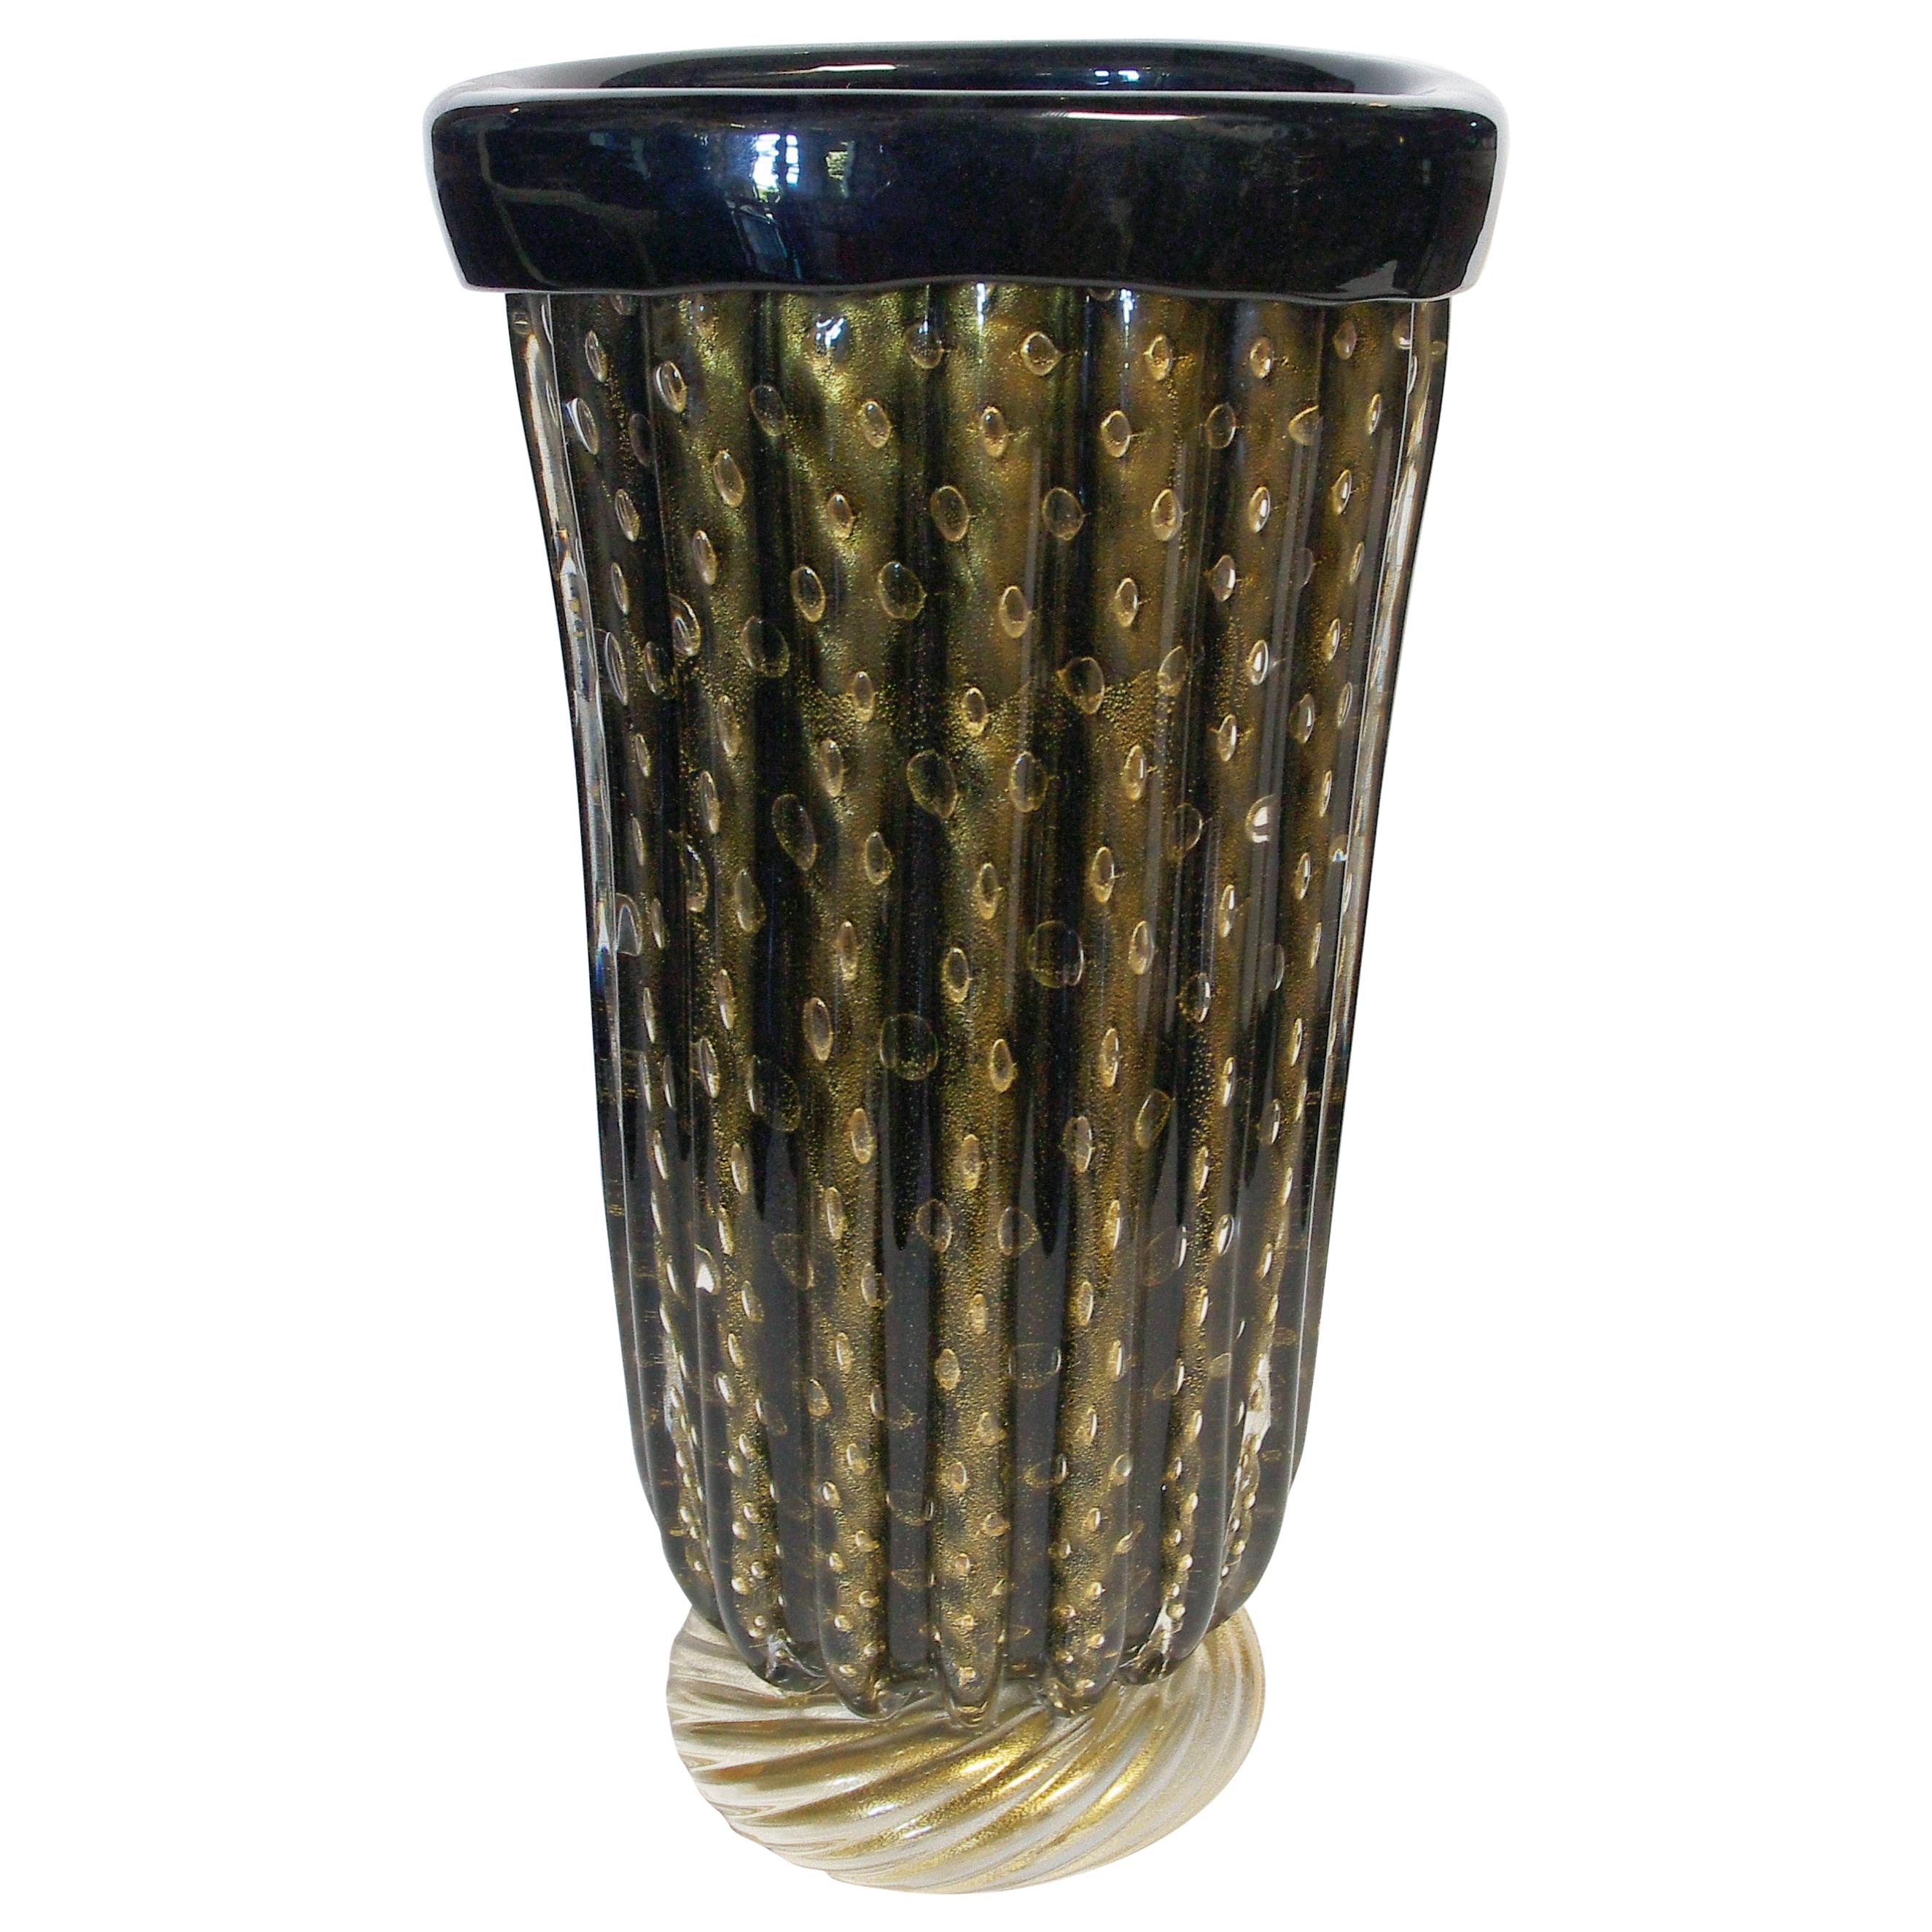 Black and Gold Murano Vases by Pino Signoretto